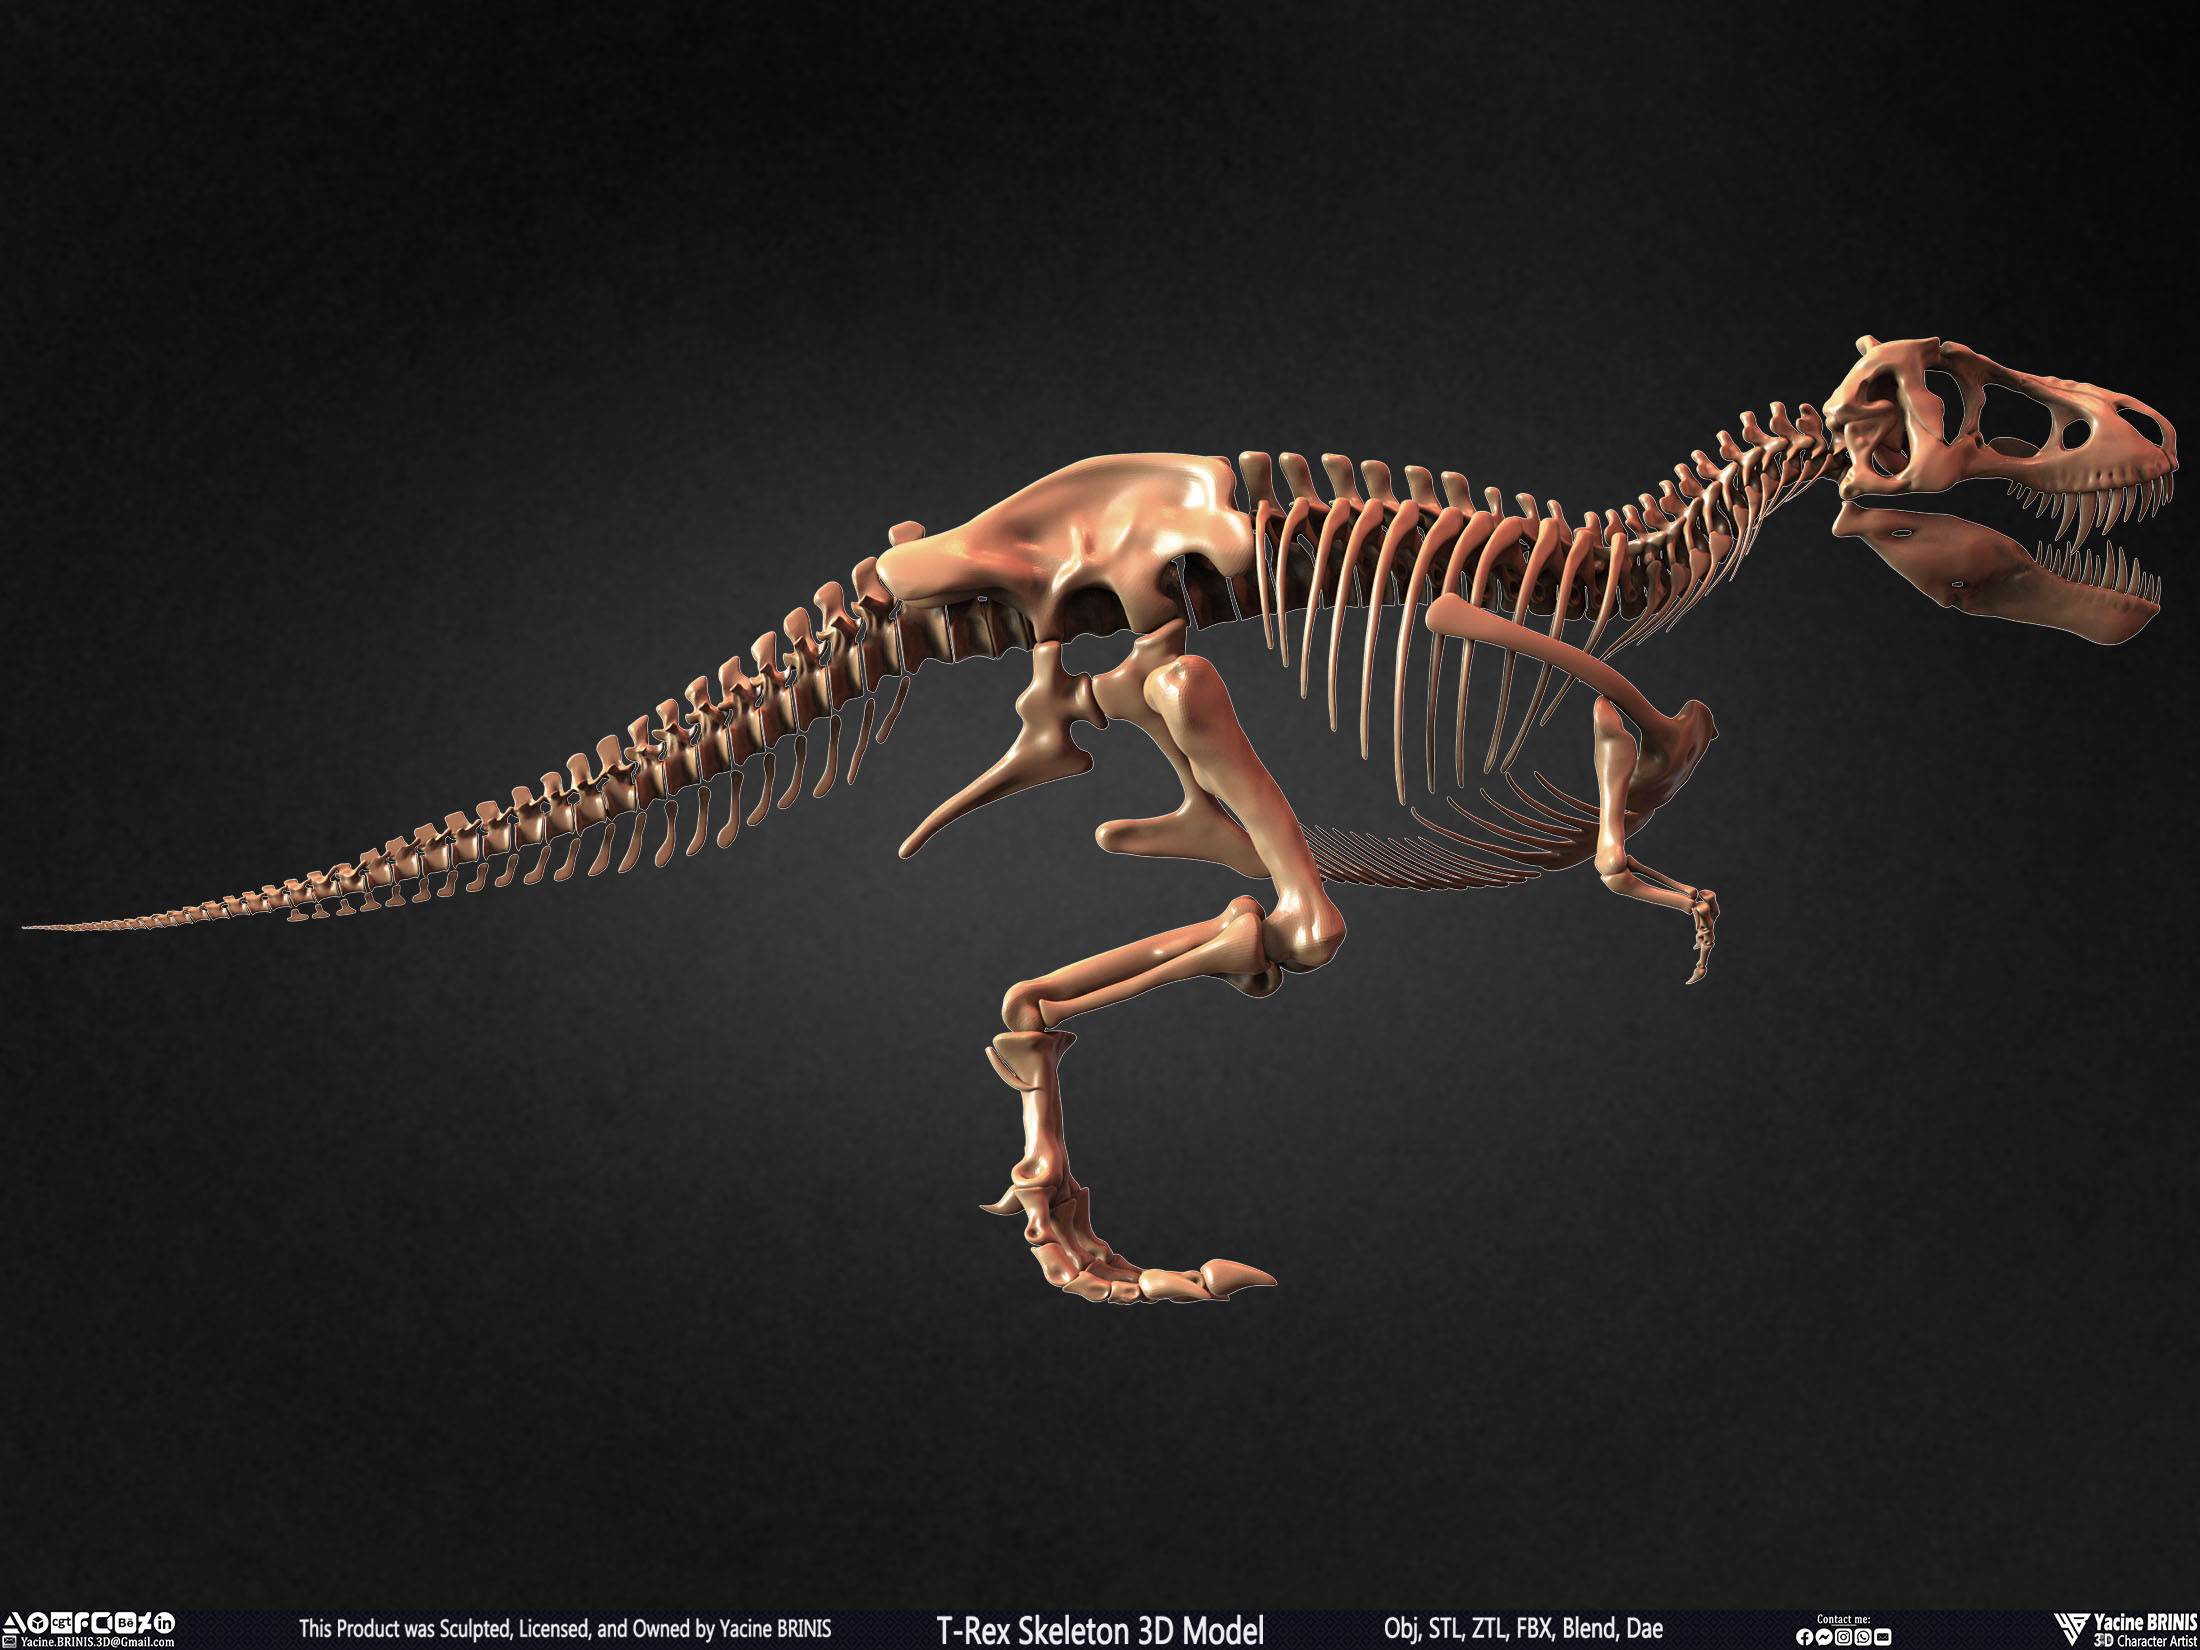 T-Rex Skeleton 3D Model (Tyrannosaurus Rex) Sculpted By Yacine BRINIS Set 007